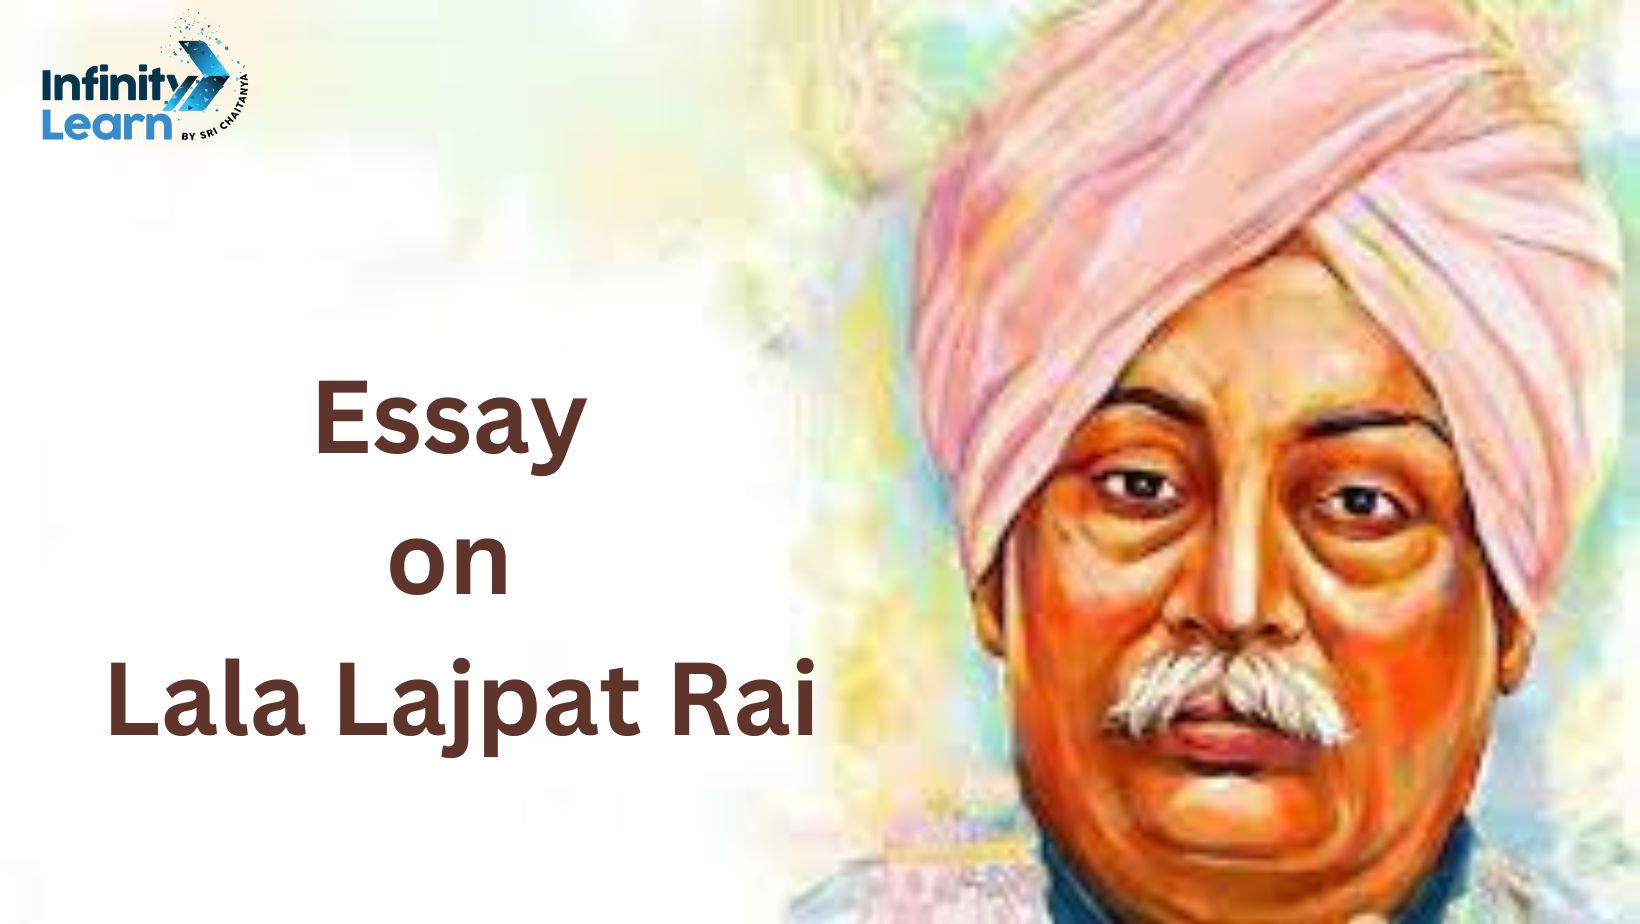 Essay on Lala Lajpat Rai